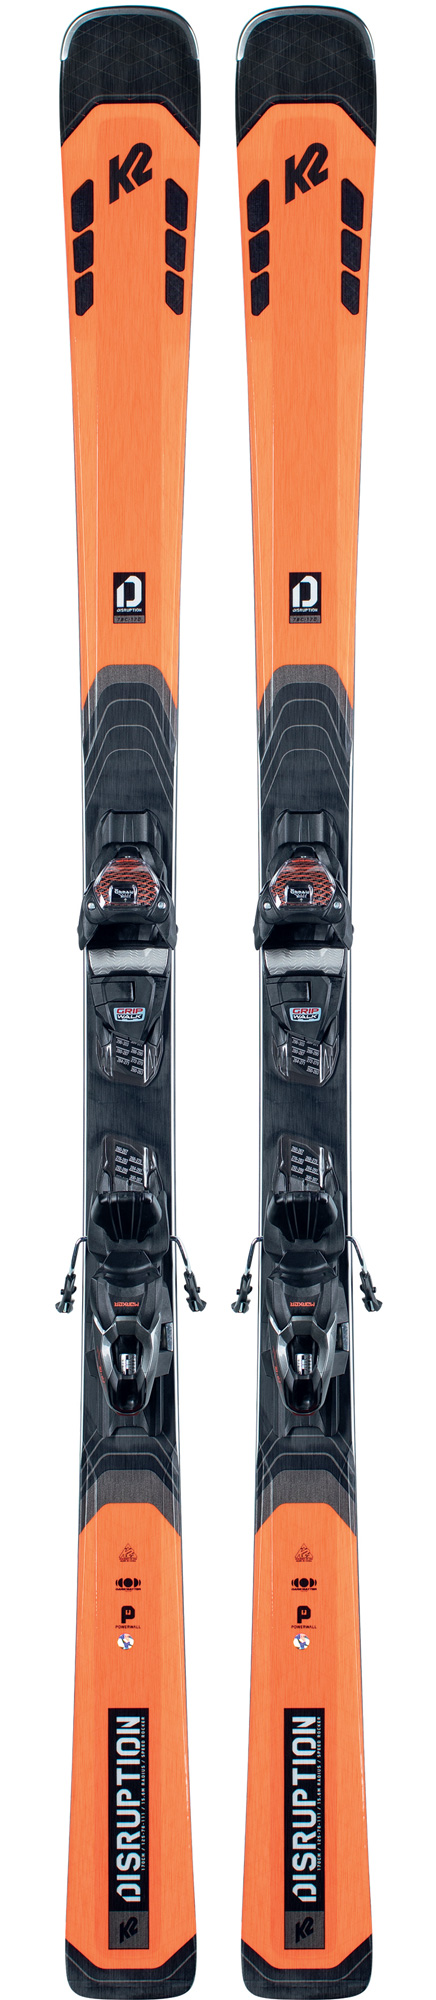 Men’s allmountain skis with binding